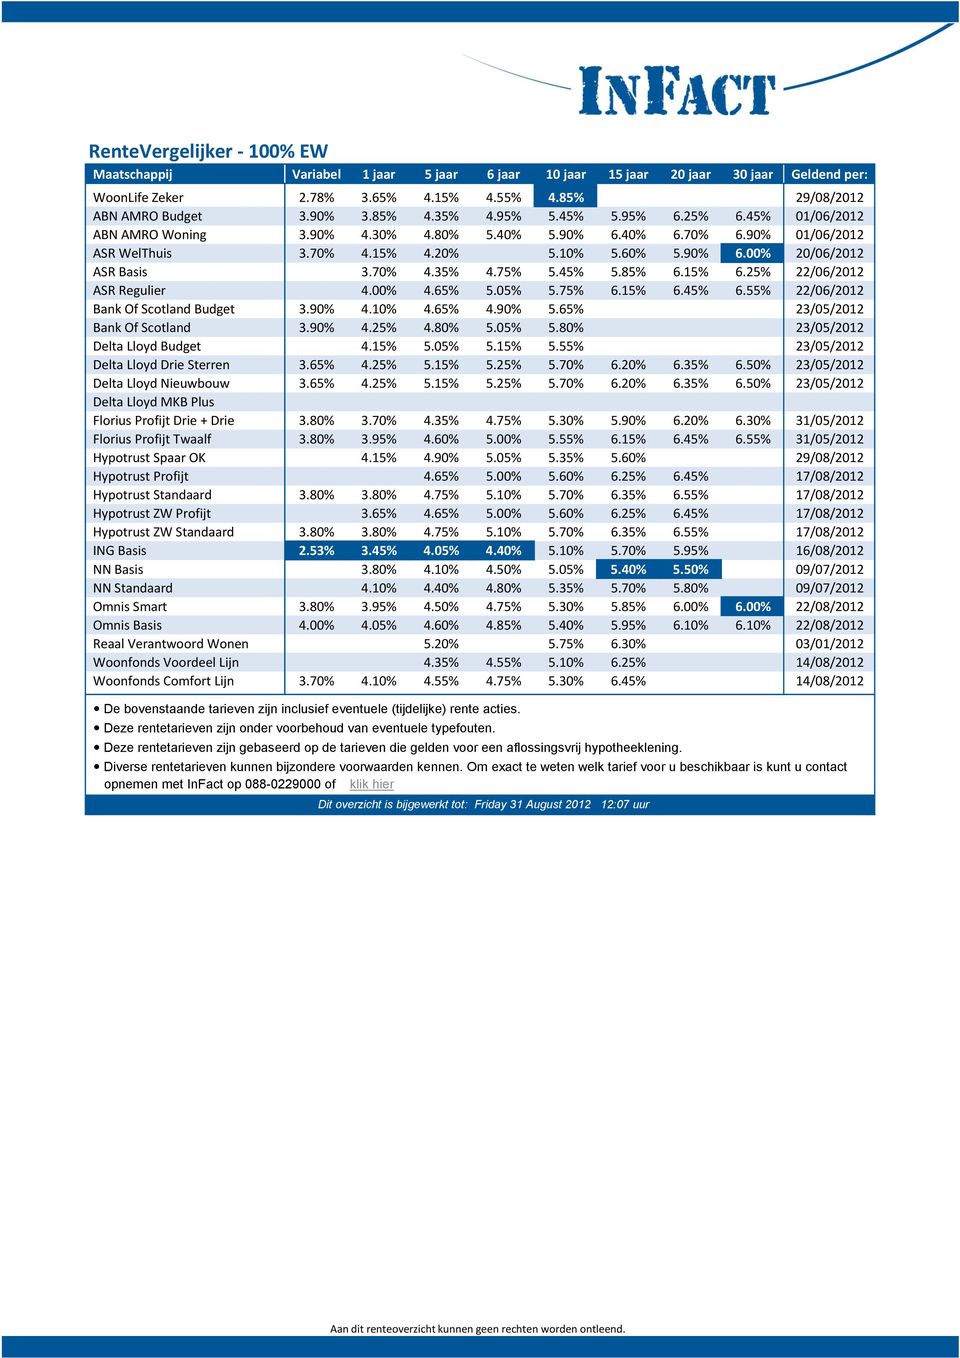 75% 6.15% 6.45% 6.55% 22/06/2012 Bank Of Scotland Budget 3.90% 4.10% 4.65% 4.90% 5.65% 23/05/2012 Bank Of Scotland 3.90% 4.25% 4.80% 5.05% 5.80% 23/05/2012 Delta Lloyd Budget 4.15% 5.